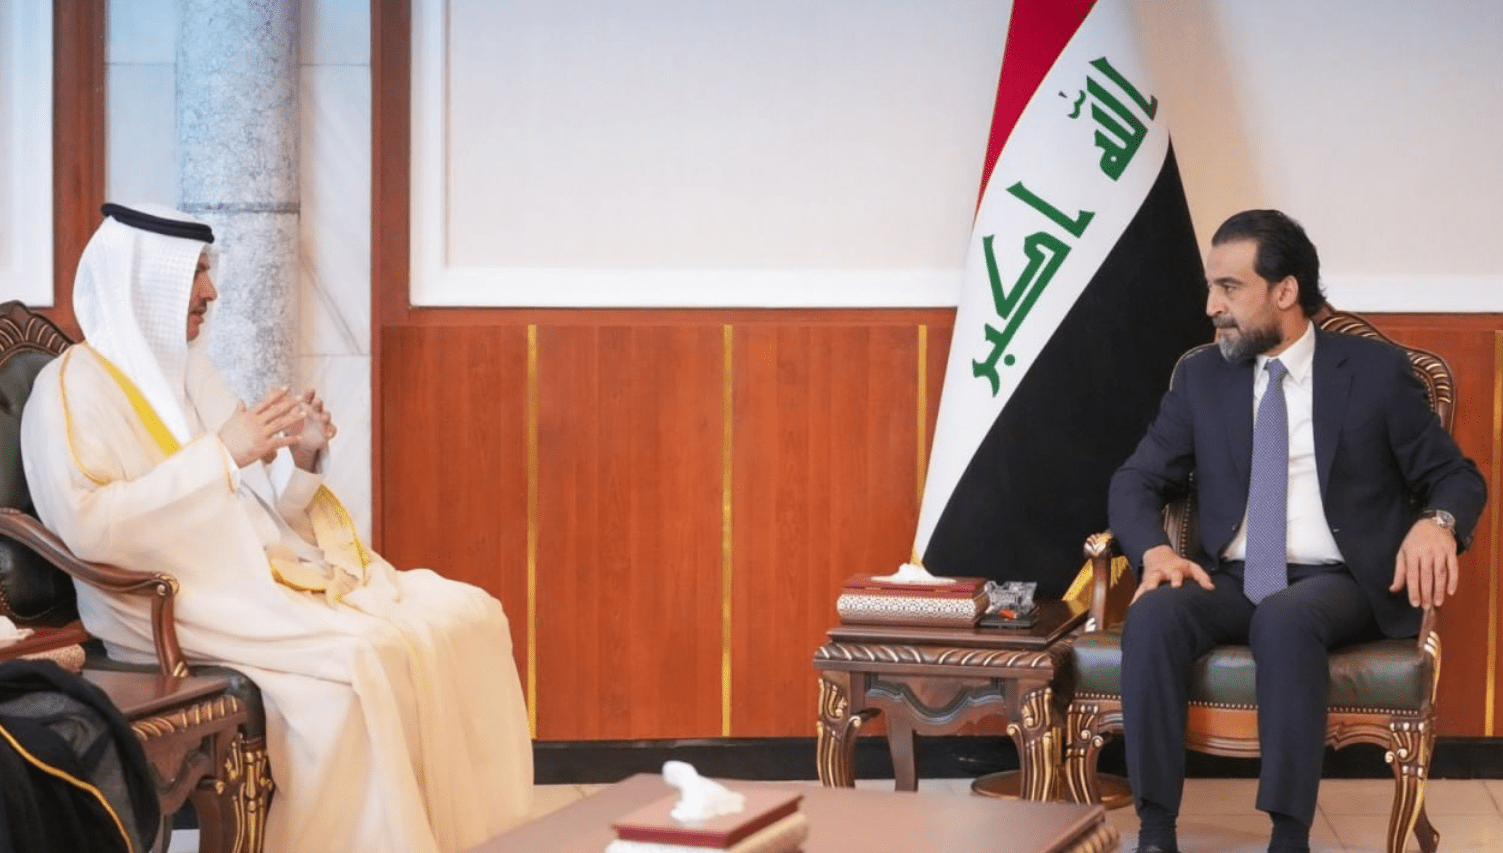 Kuwaiti Parliamentarians and Iraqi Lawmaker Meet to Discuss Bilateral Agreements